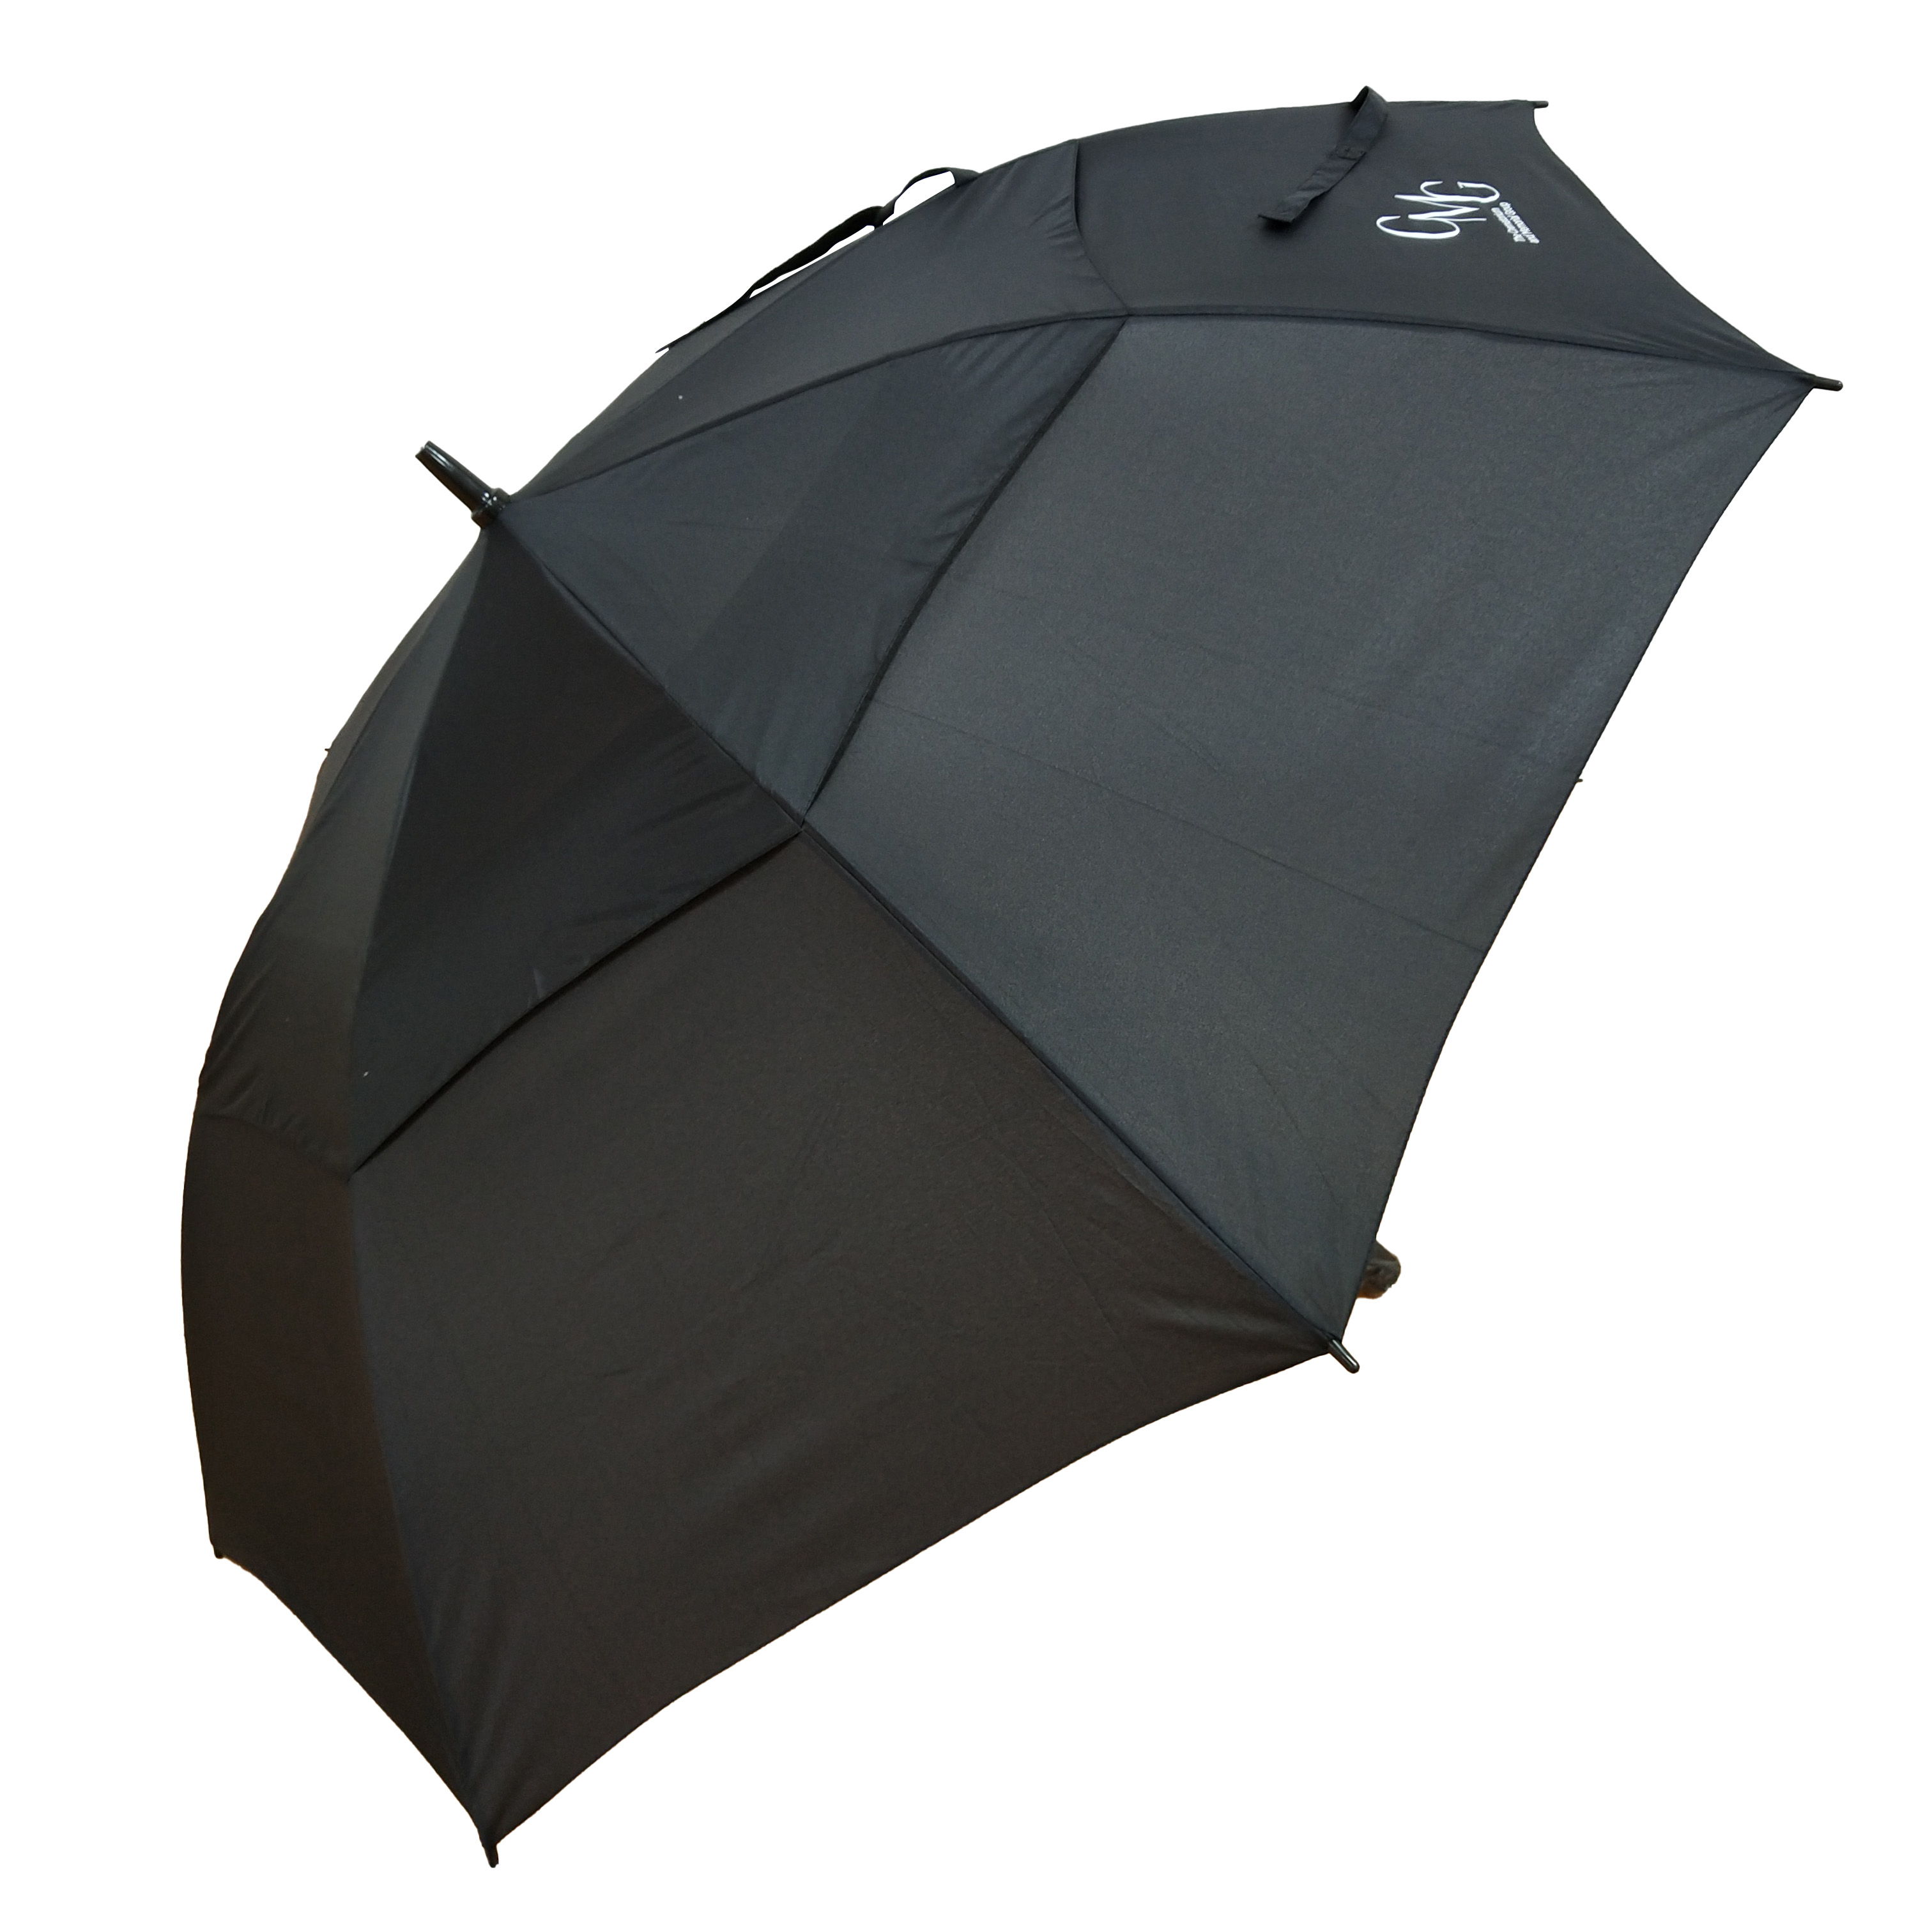 LO-0005 double canopy umbrellas with logo printed